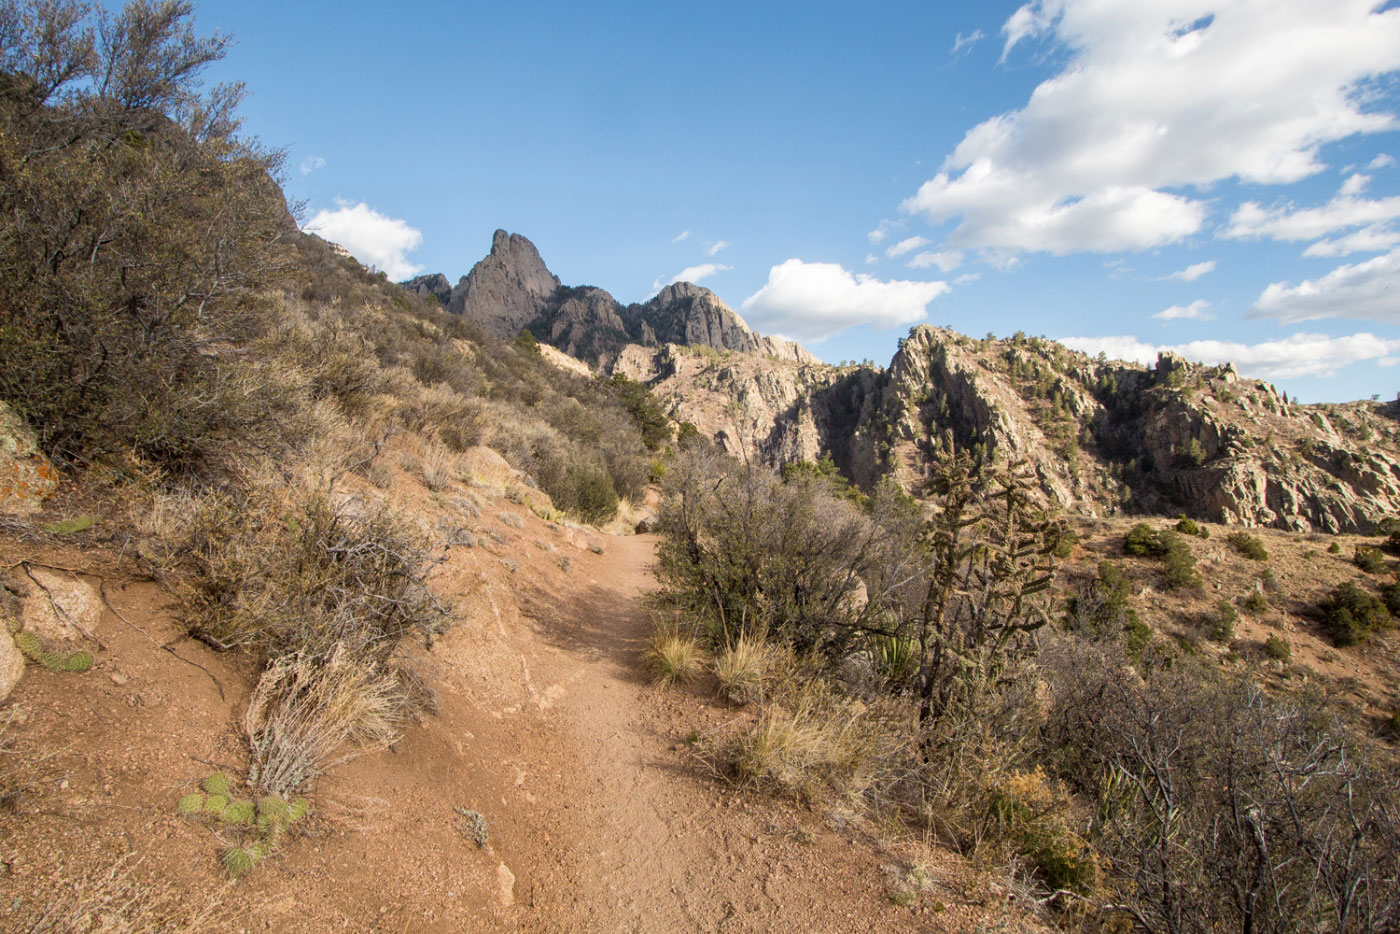 New Mexico: Domingo Baca trail, Sandias